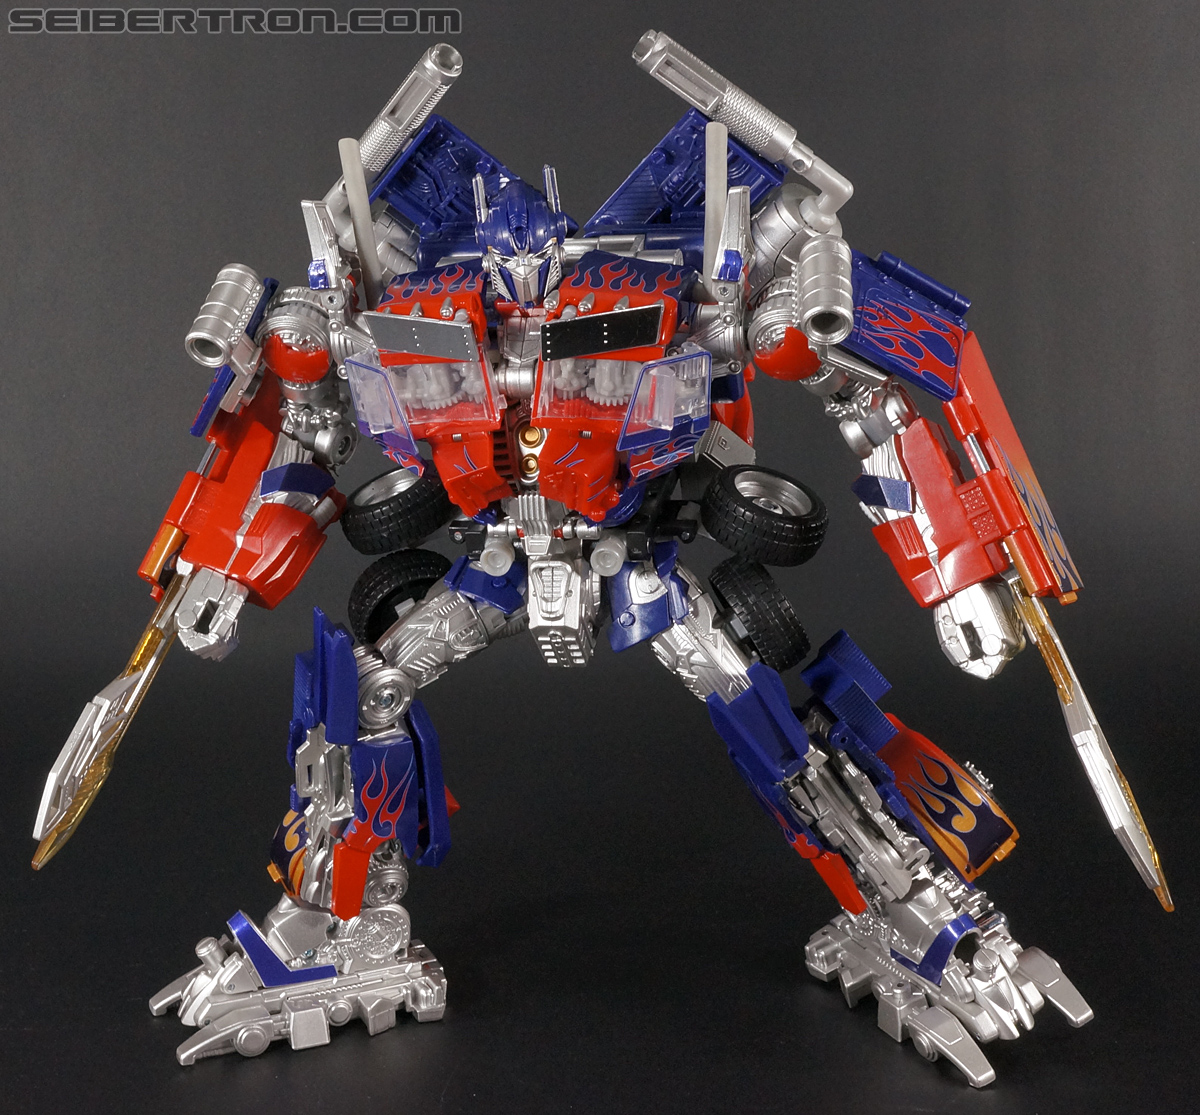 transformers 2 optimus prime toy